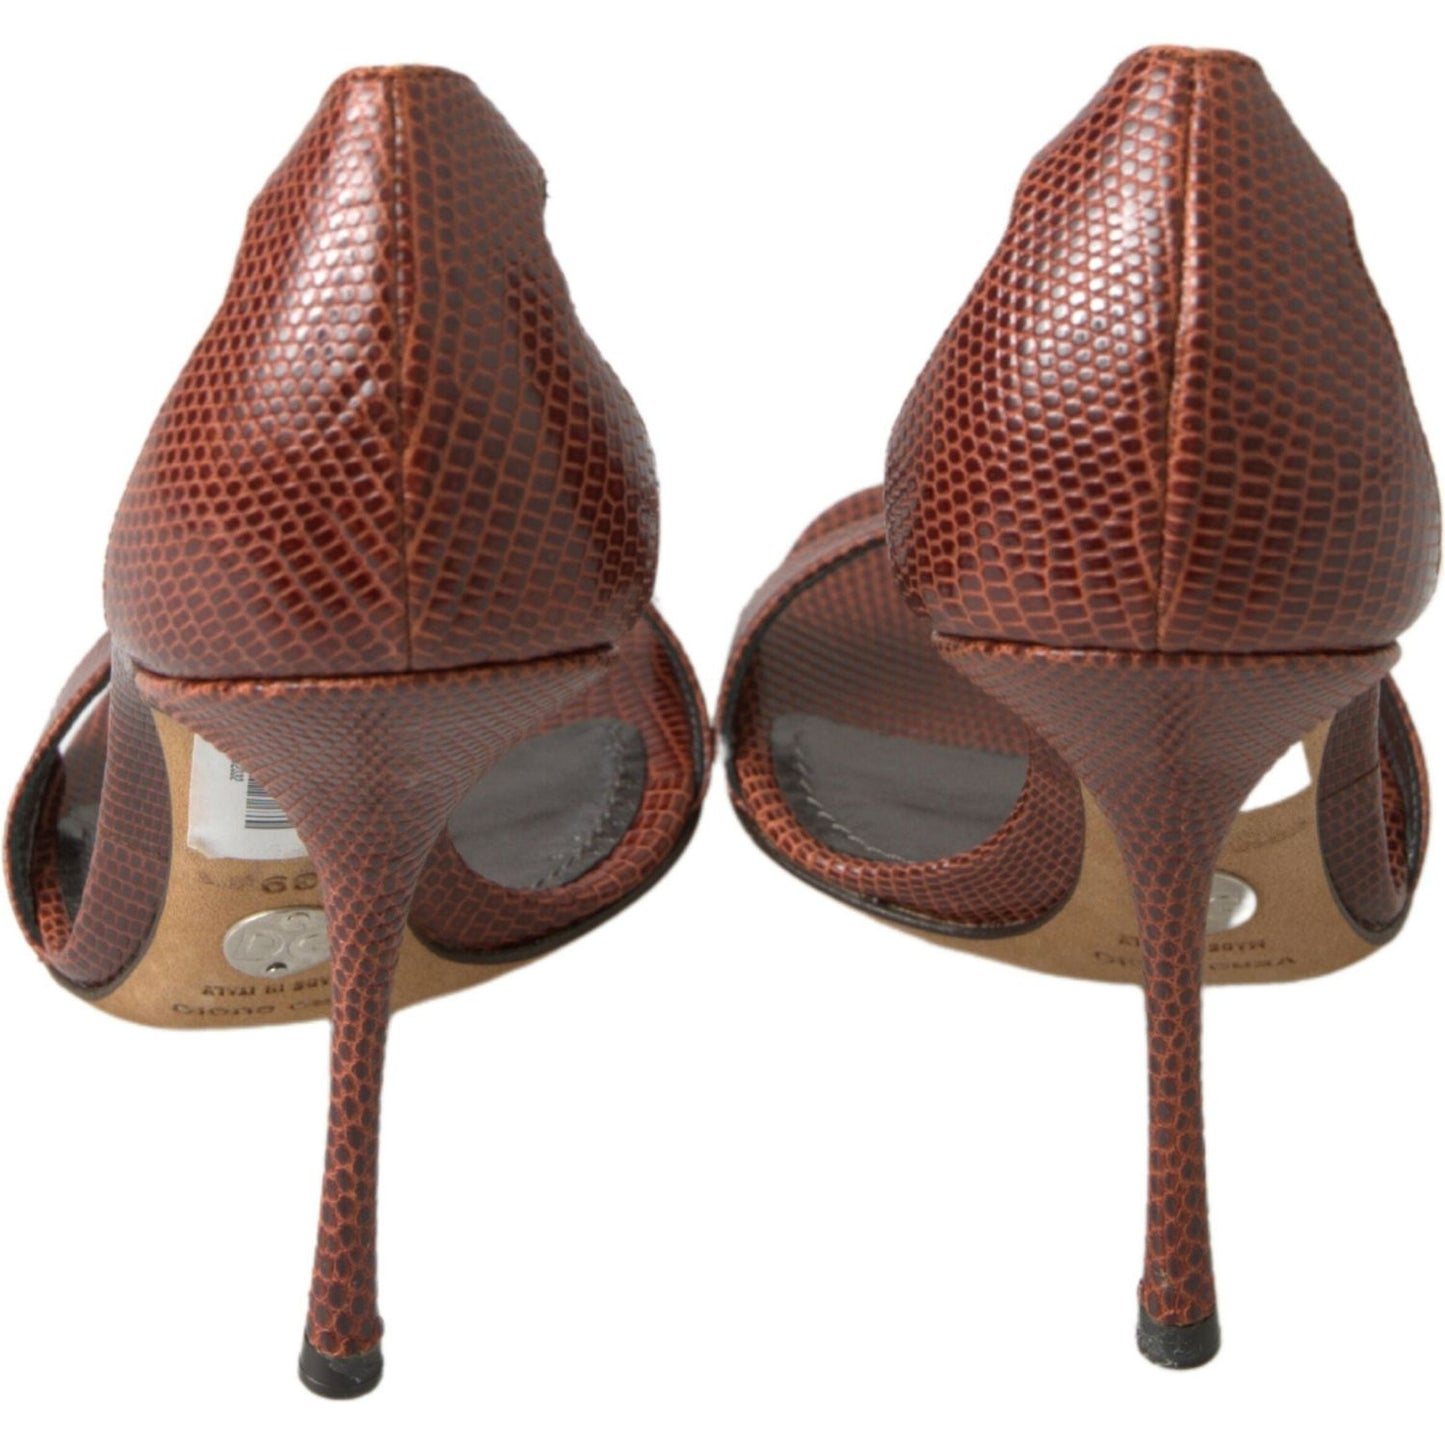 Dolce & Gabbana Elegant Strappy Leather Heels Sandals brown-leather-high-heels-sandals-shoes 465A0207-scaled-860691c4-703.jpg